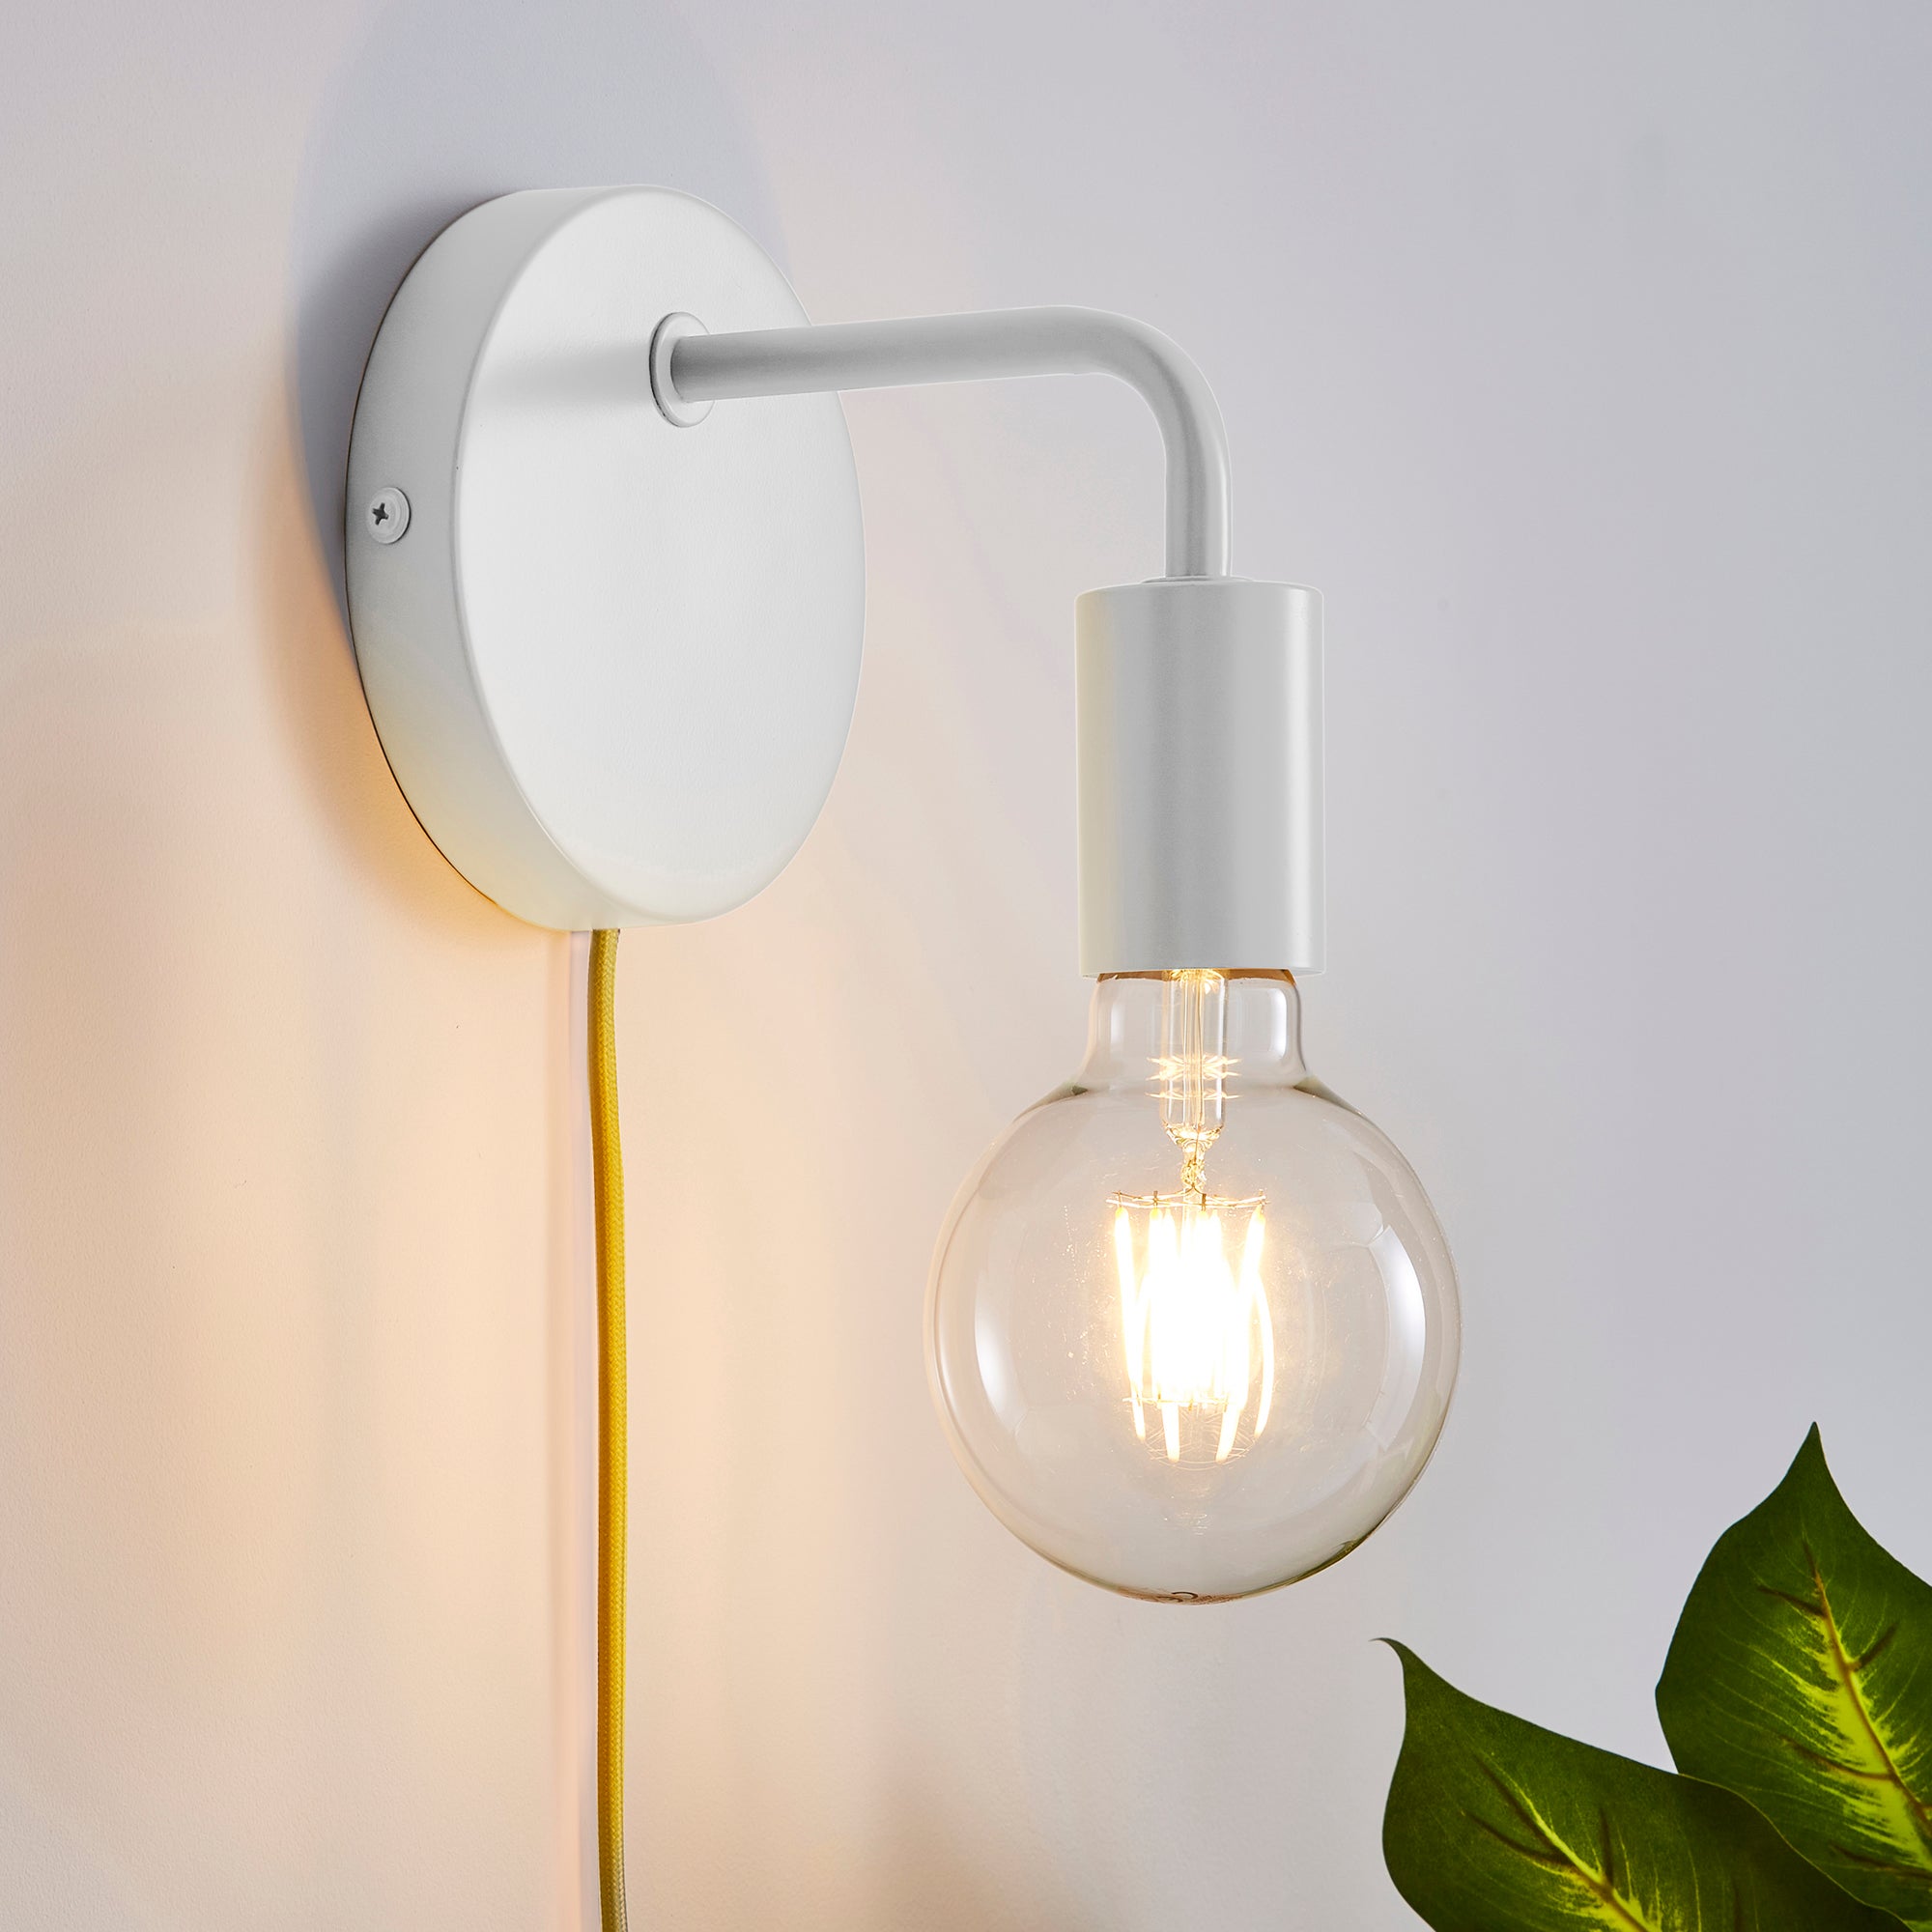 Elements Koppla Plug-In Wall Light